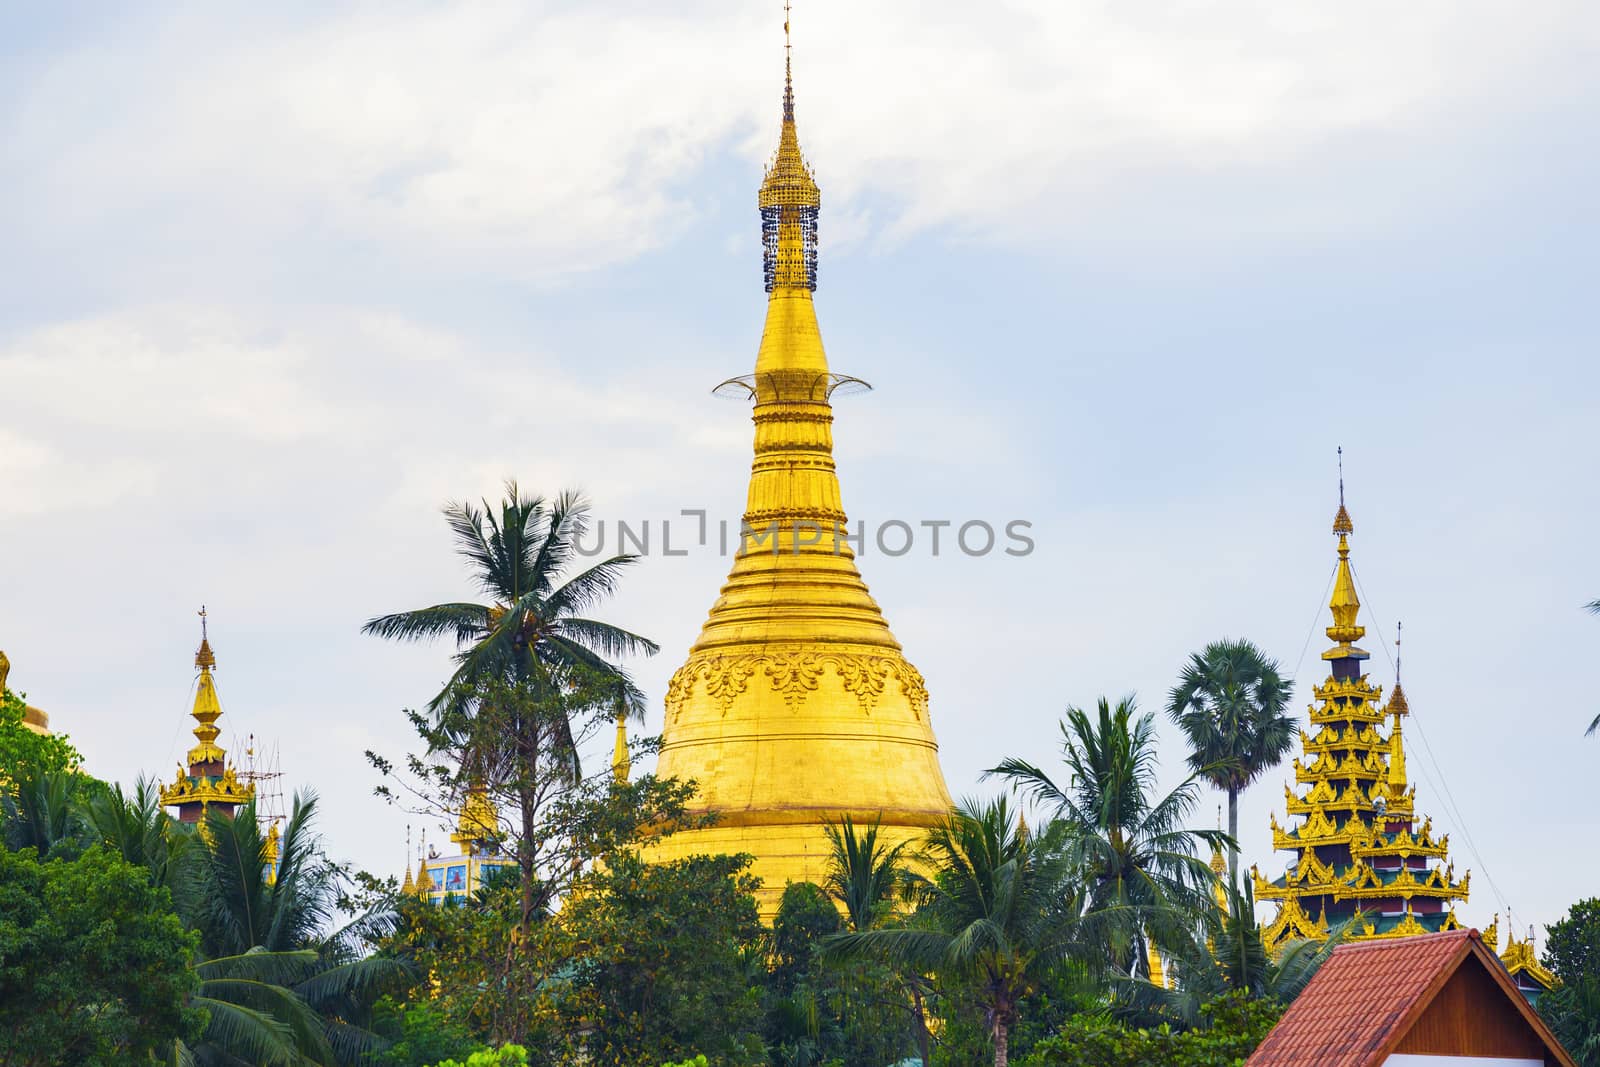 Shwedagon Pagoda of Myanmar (Burma) at sunset